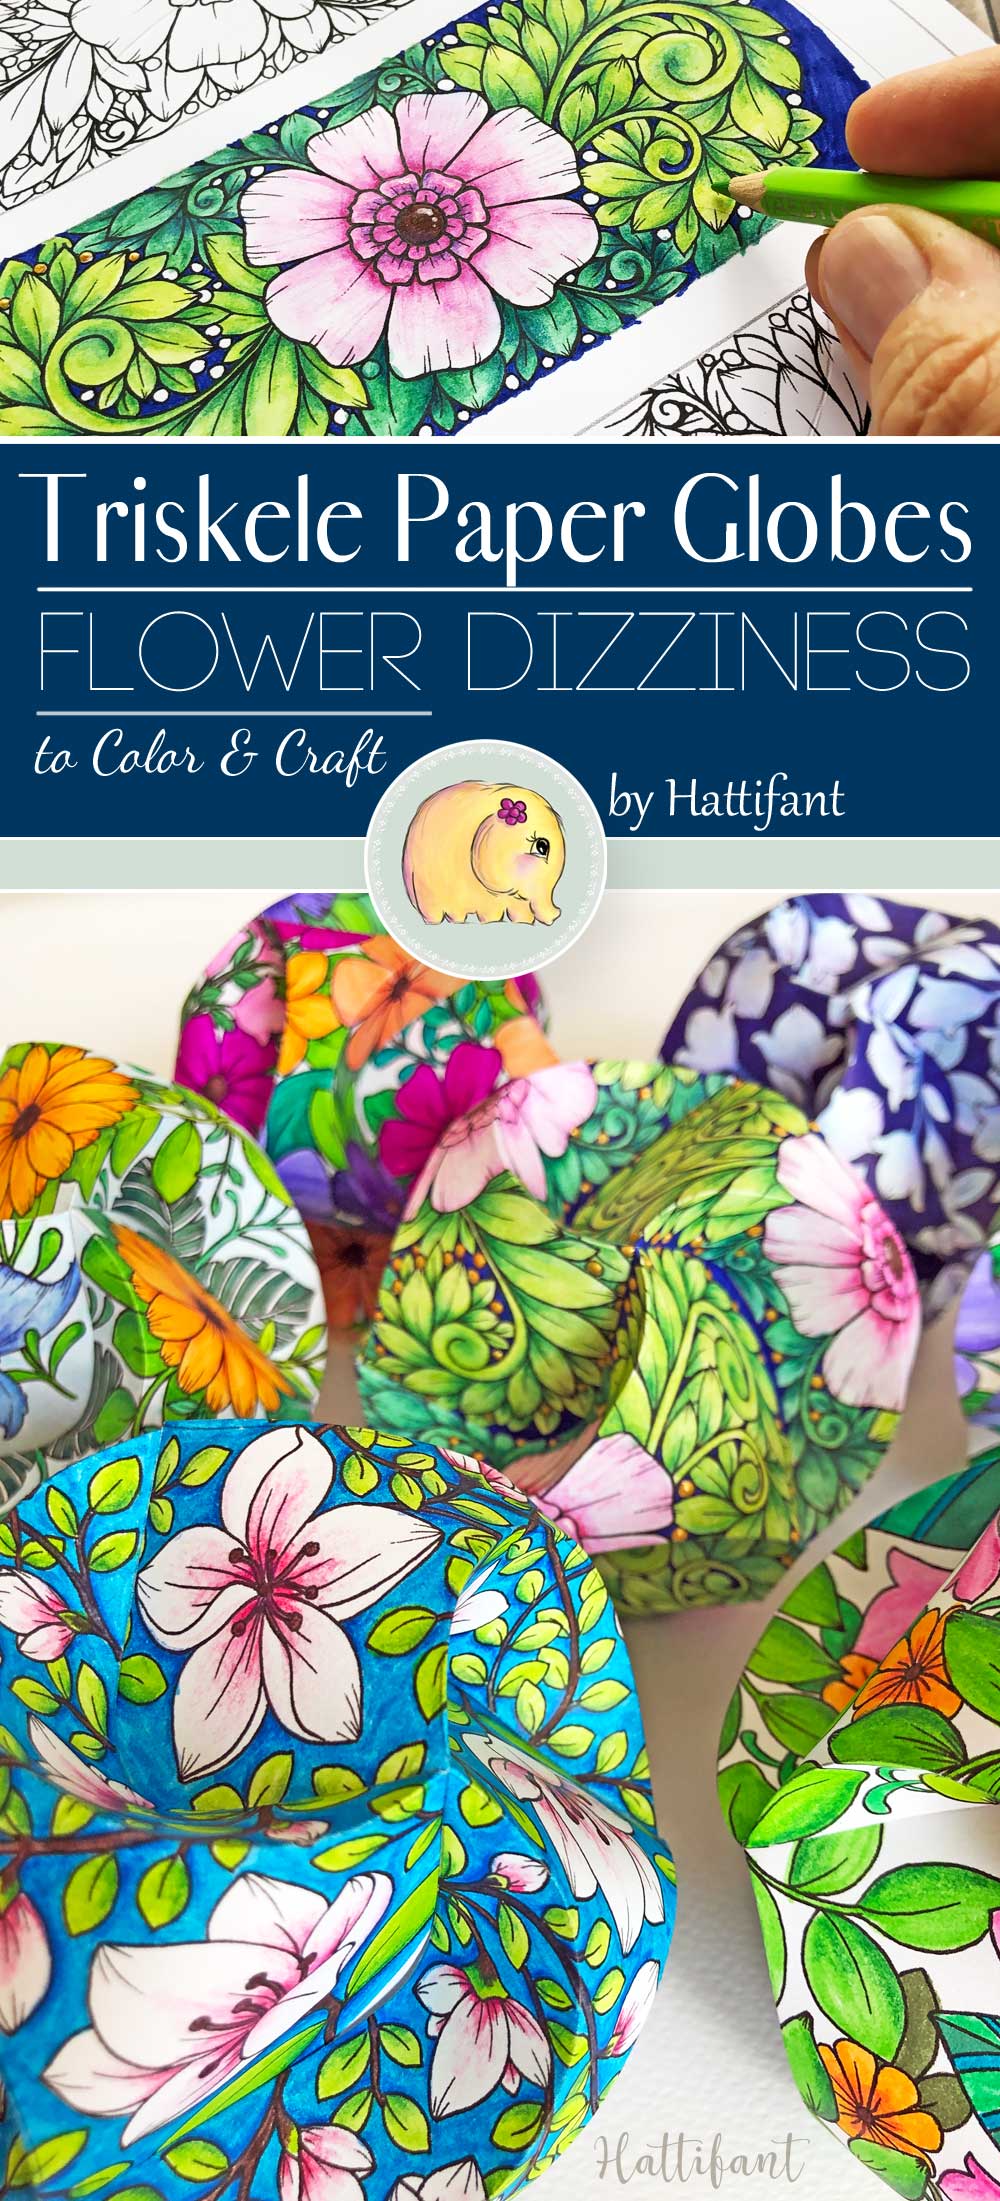 Triskele paper globes flower dizziness